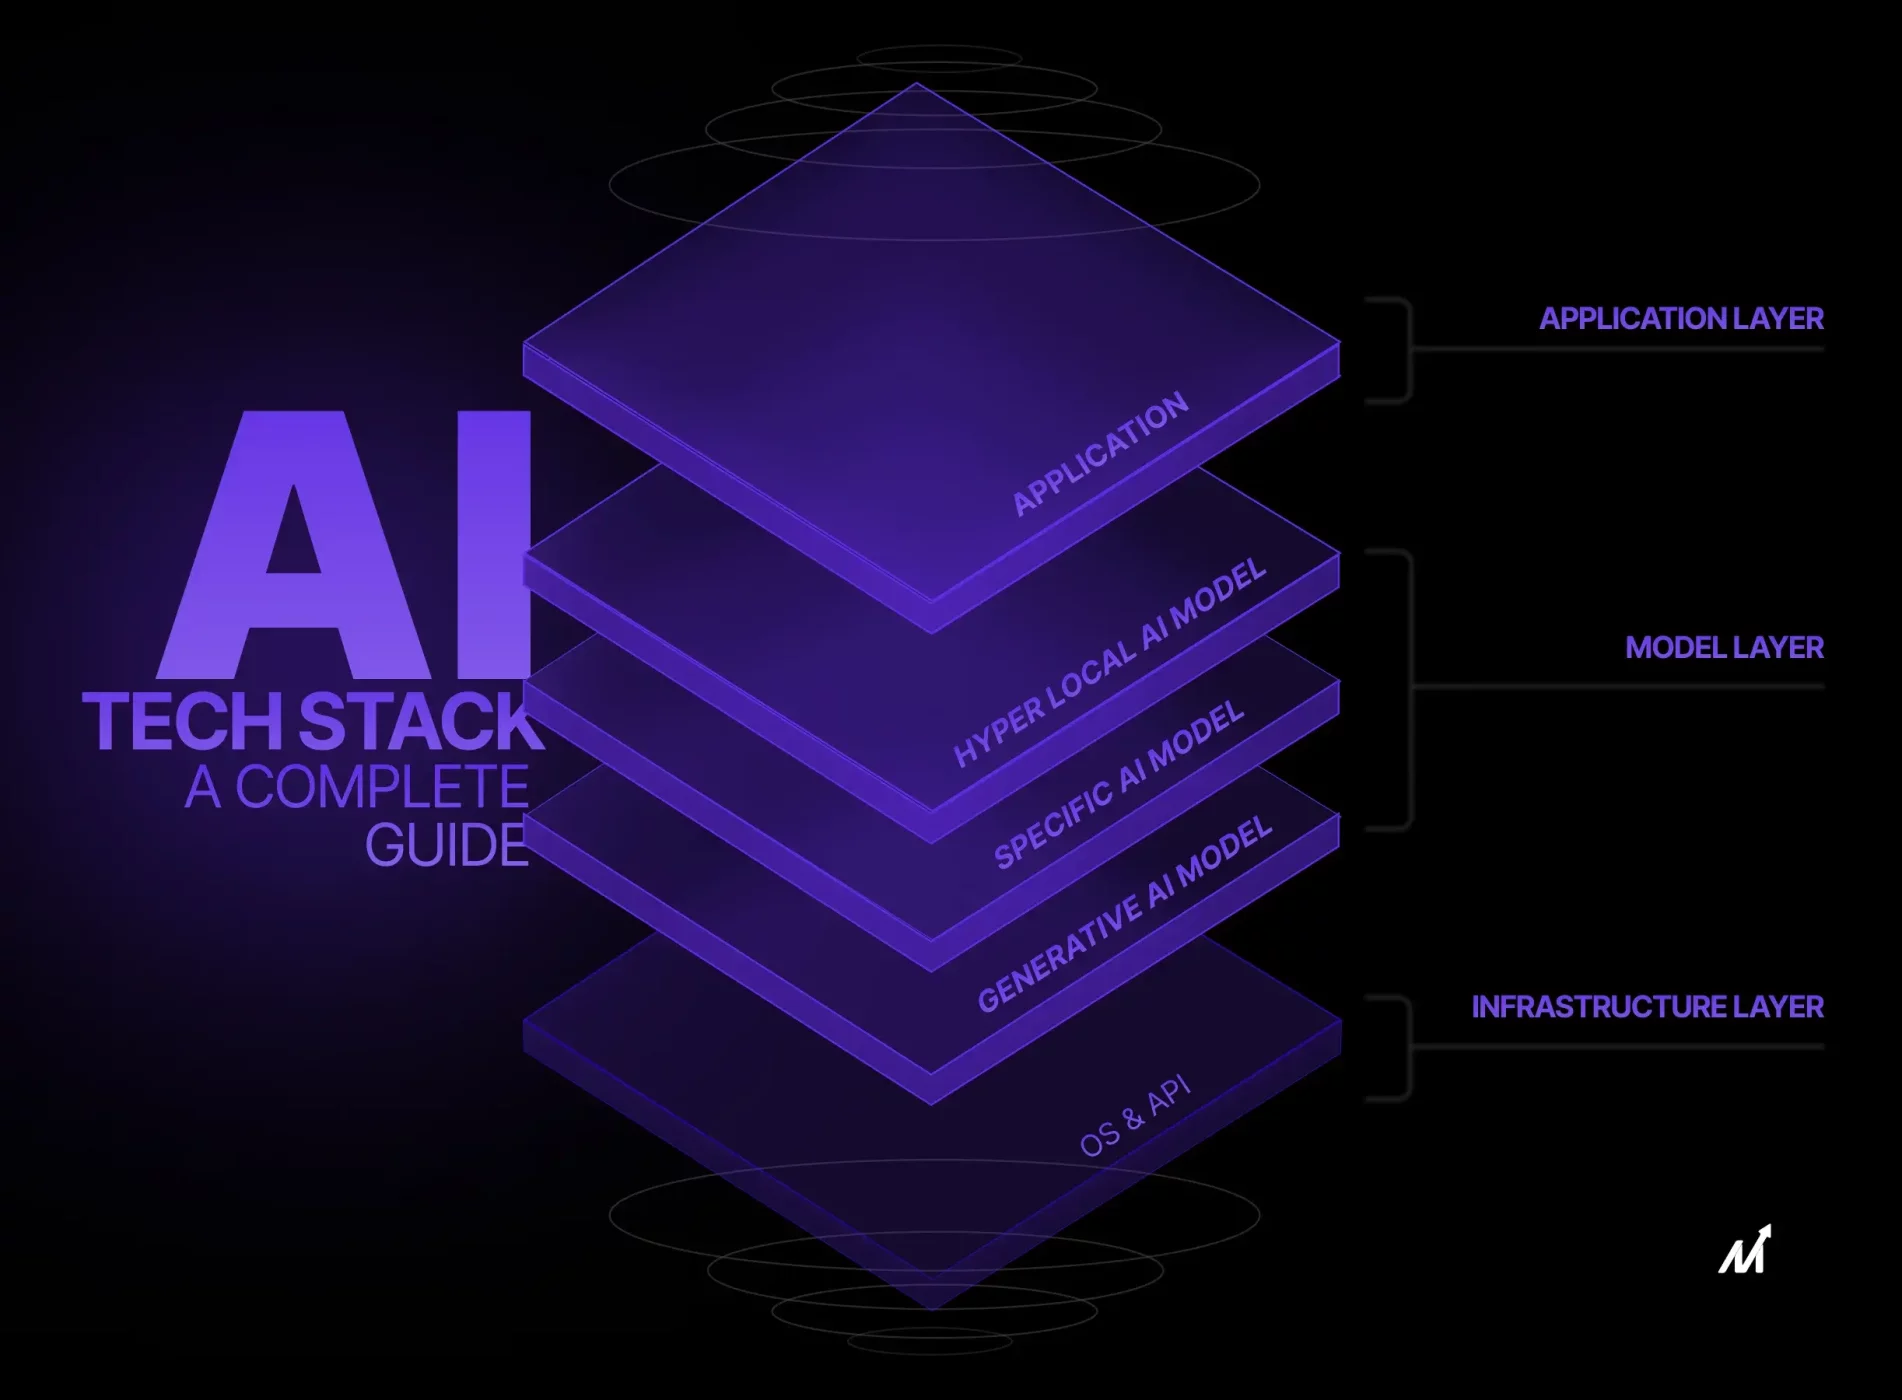 AI Tech Stack: A Complete Guide